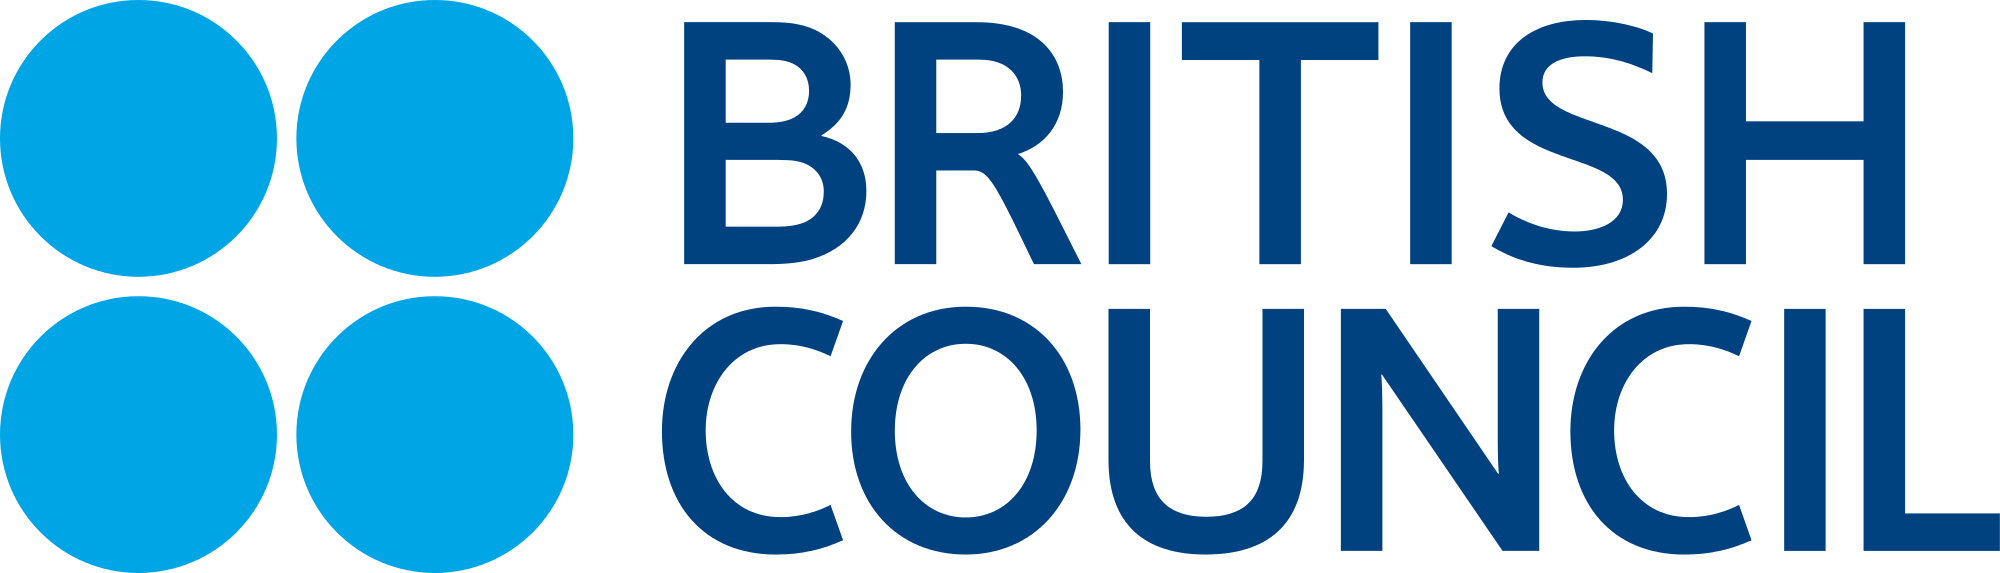 Clients And Collaborators - British Council Logo (2000x573)